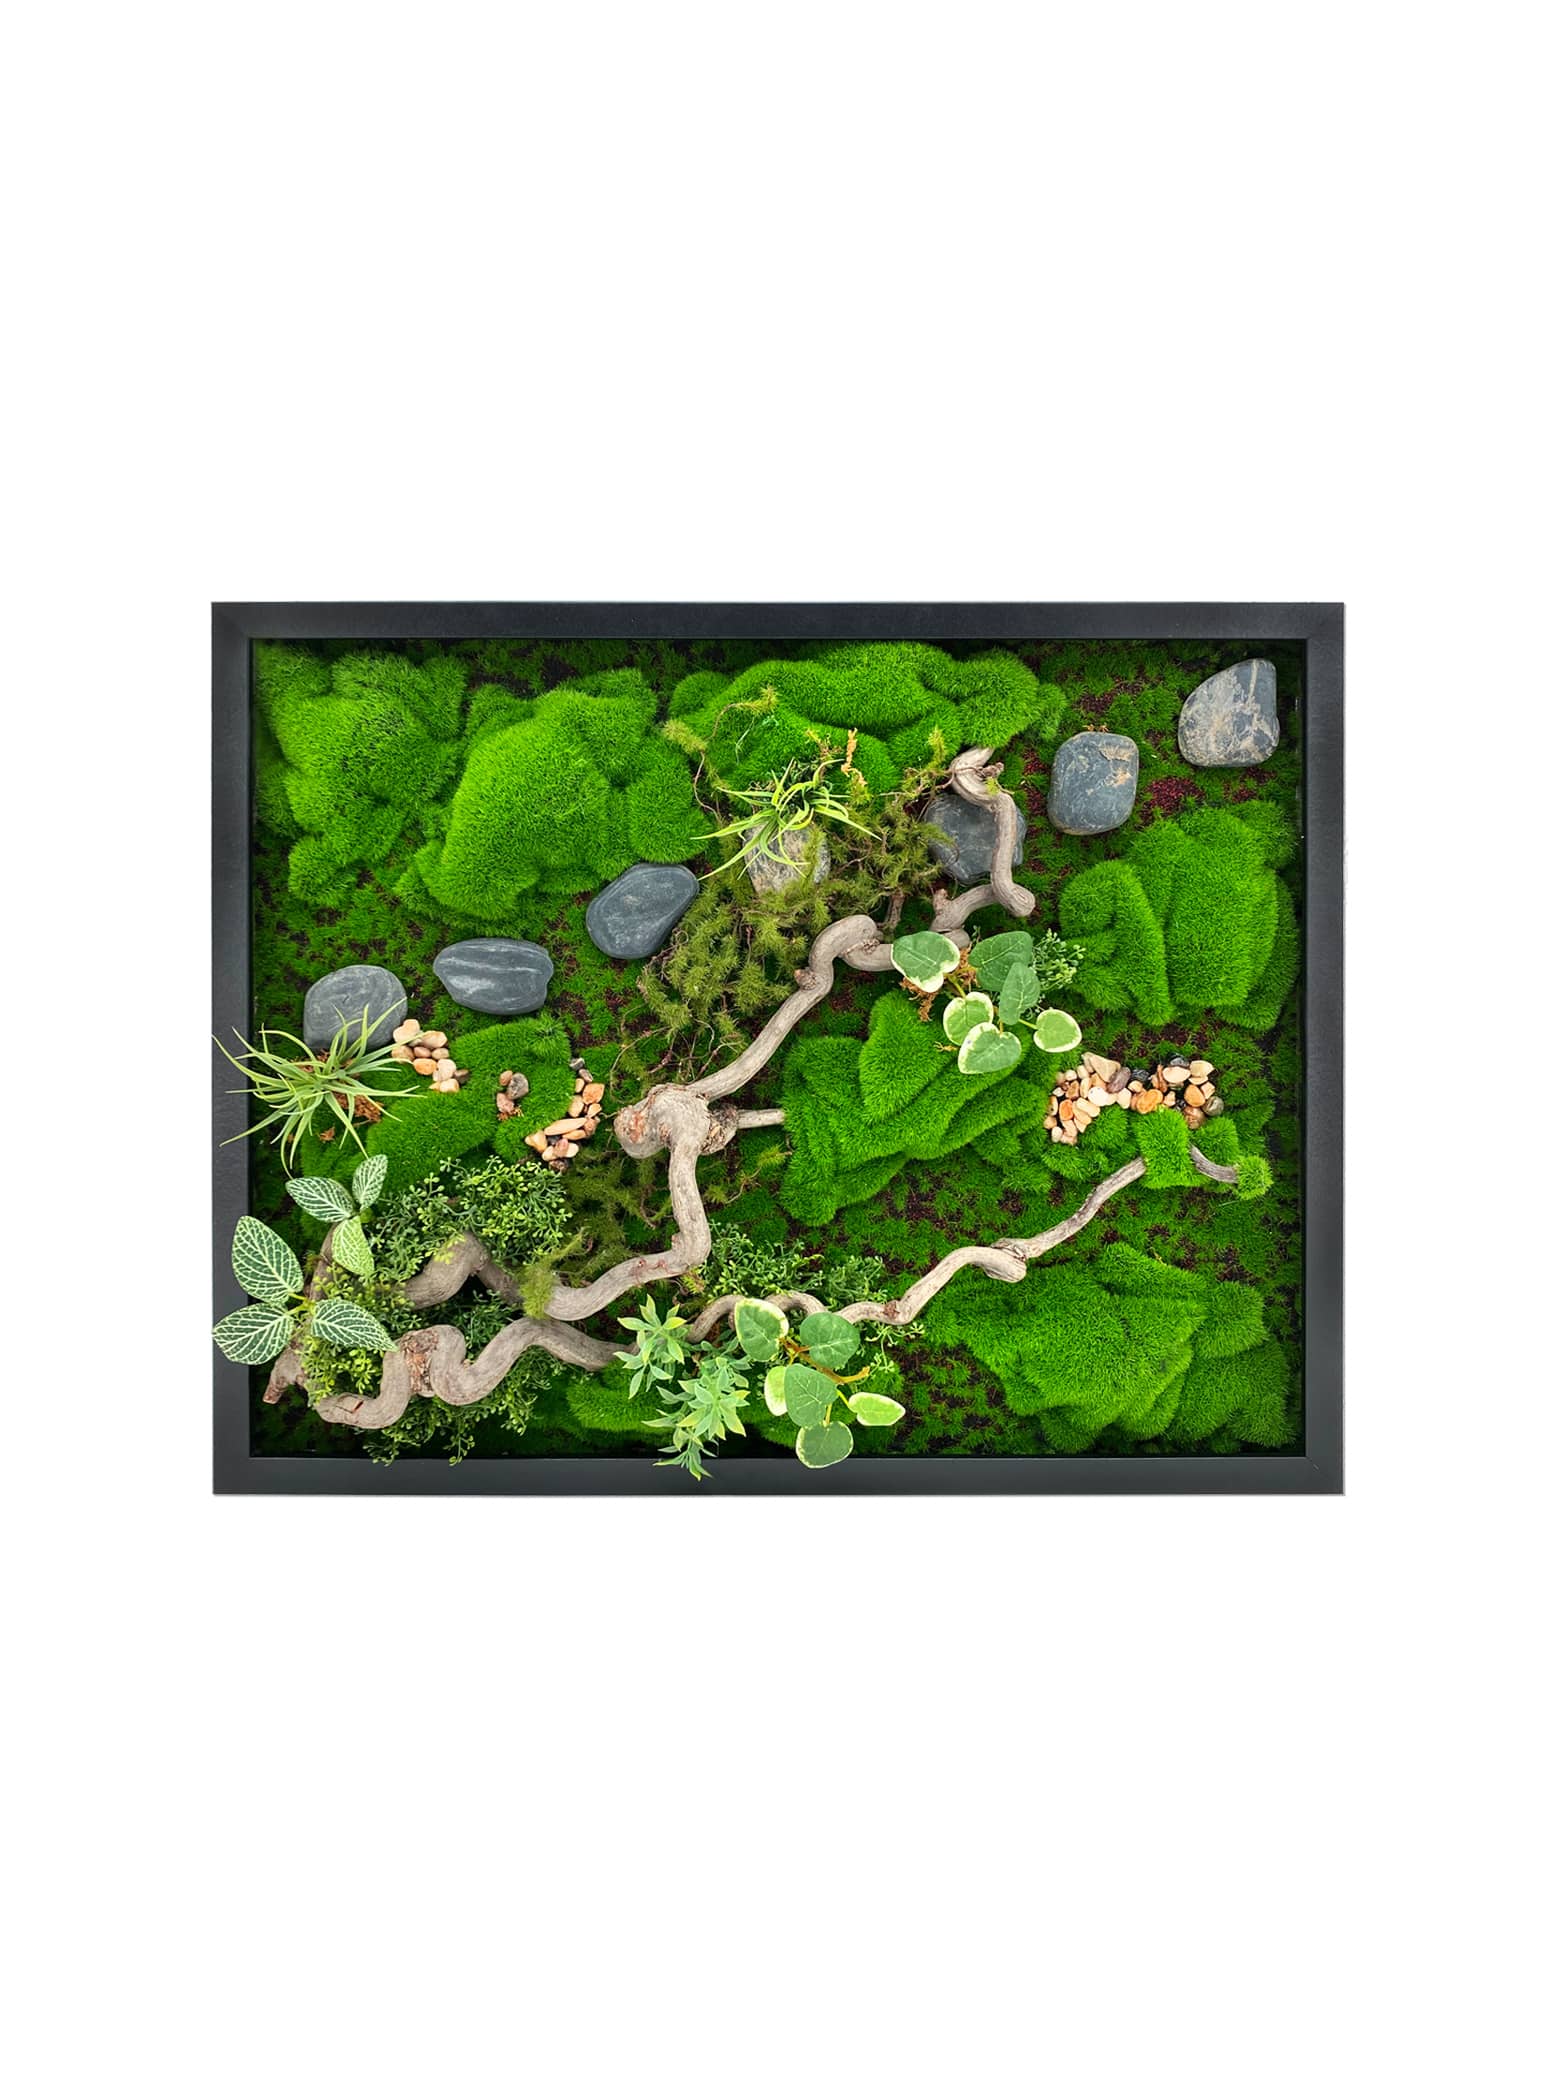 Moss Display Art Framed